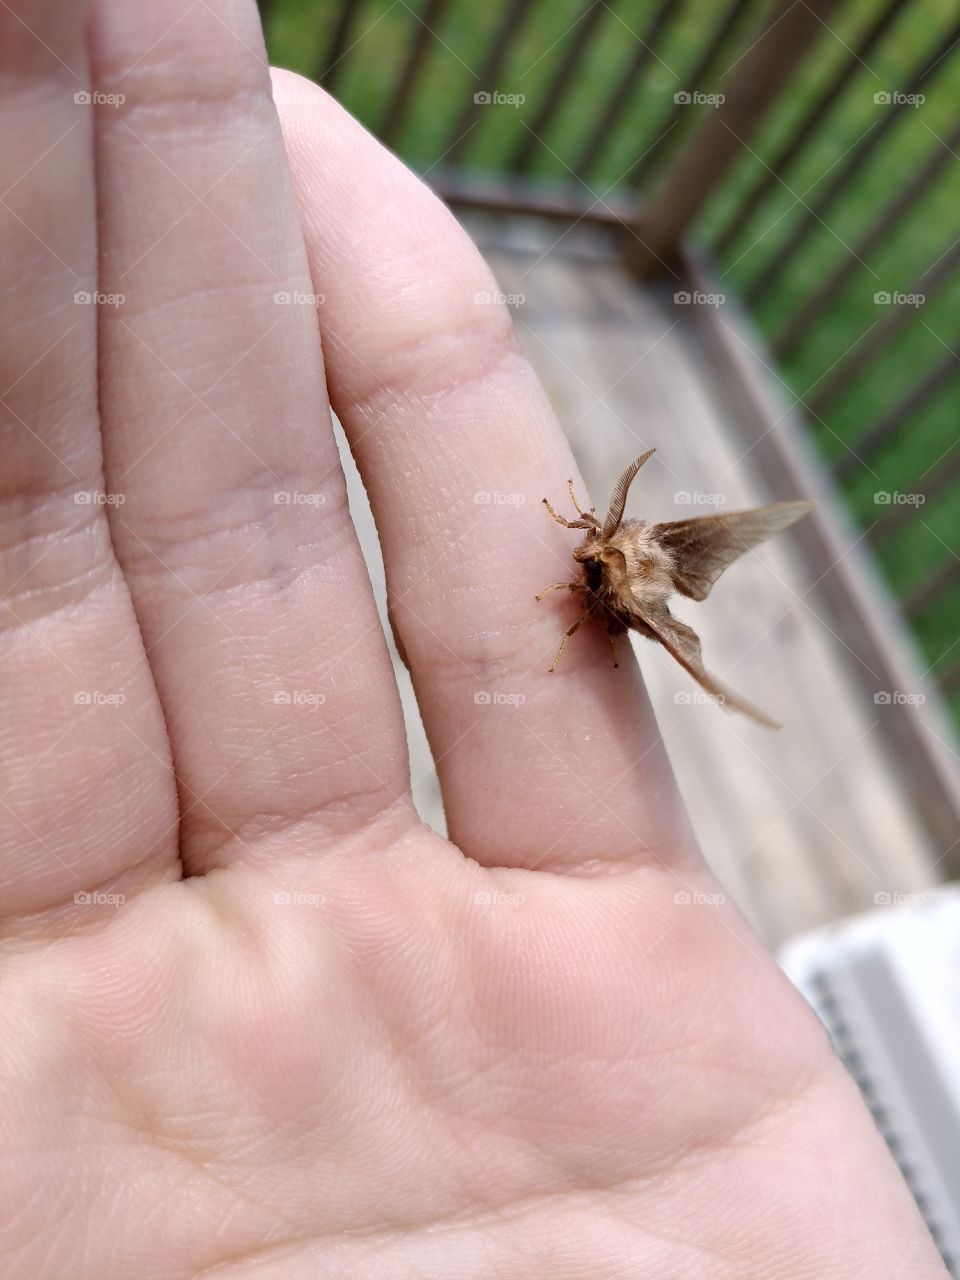 A little moth I found.